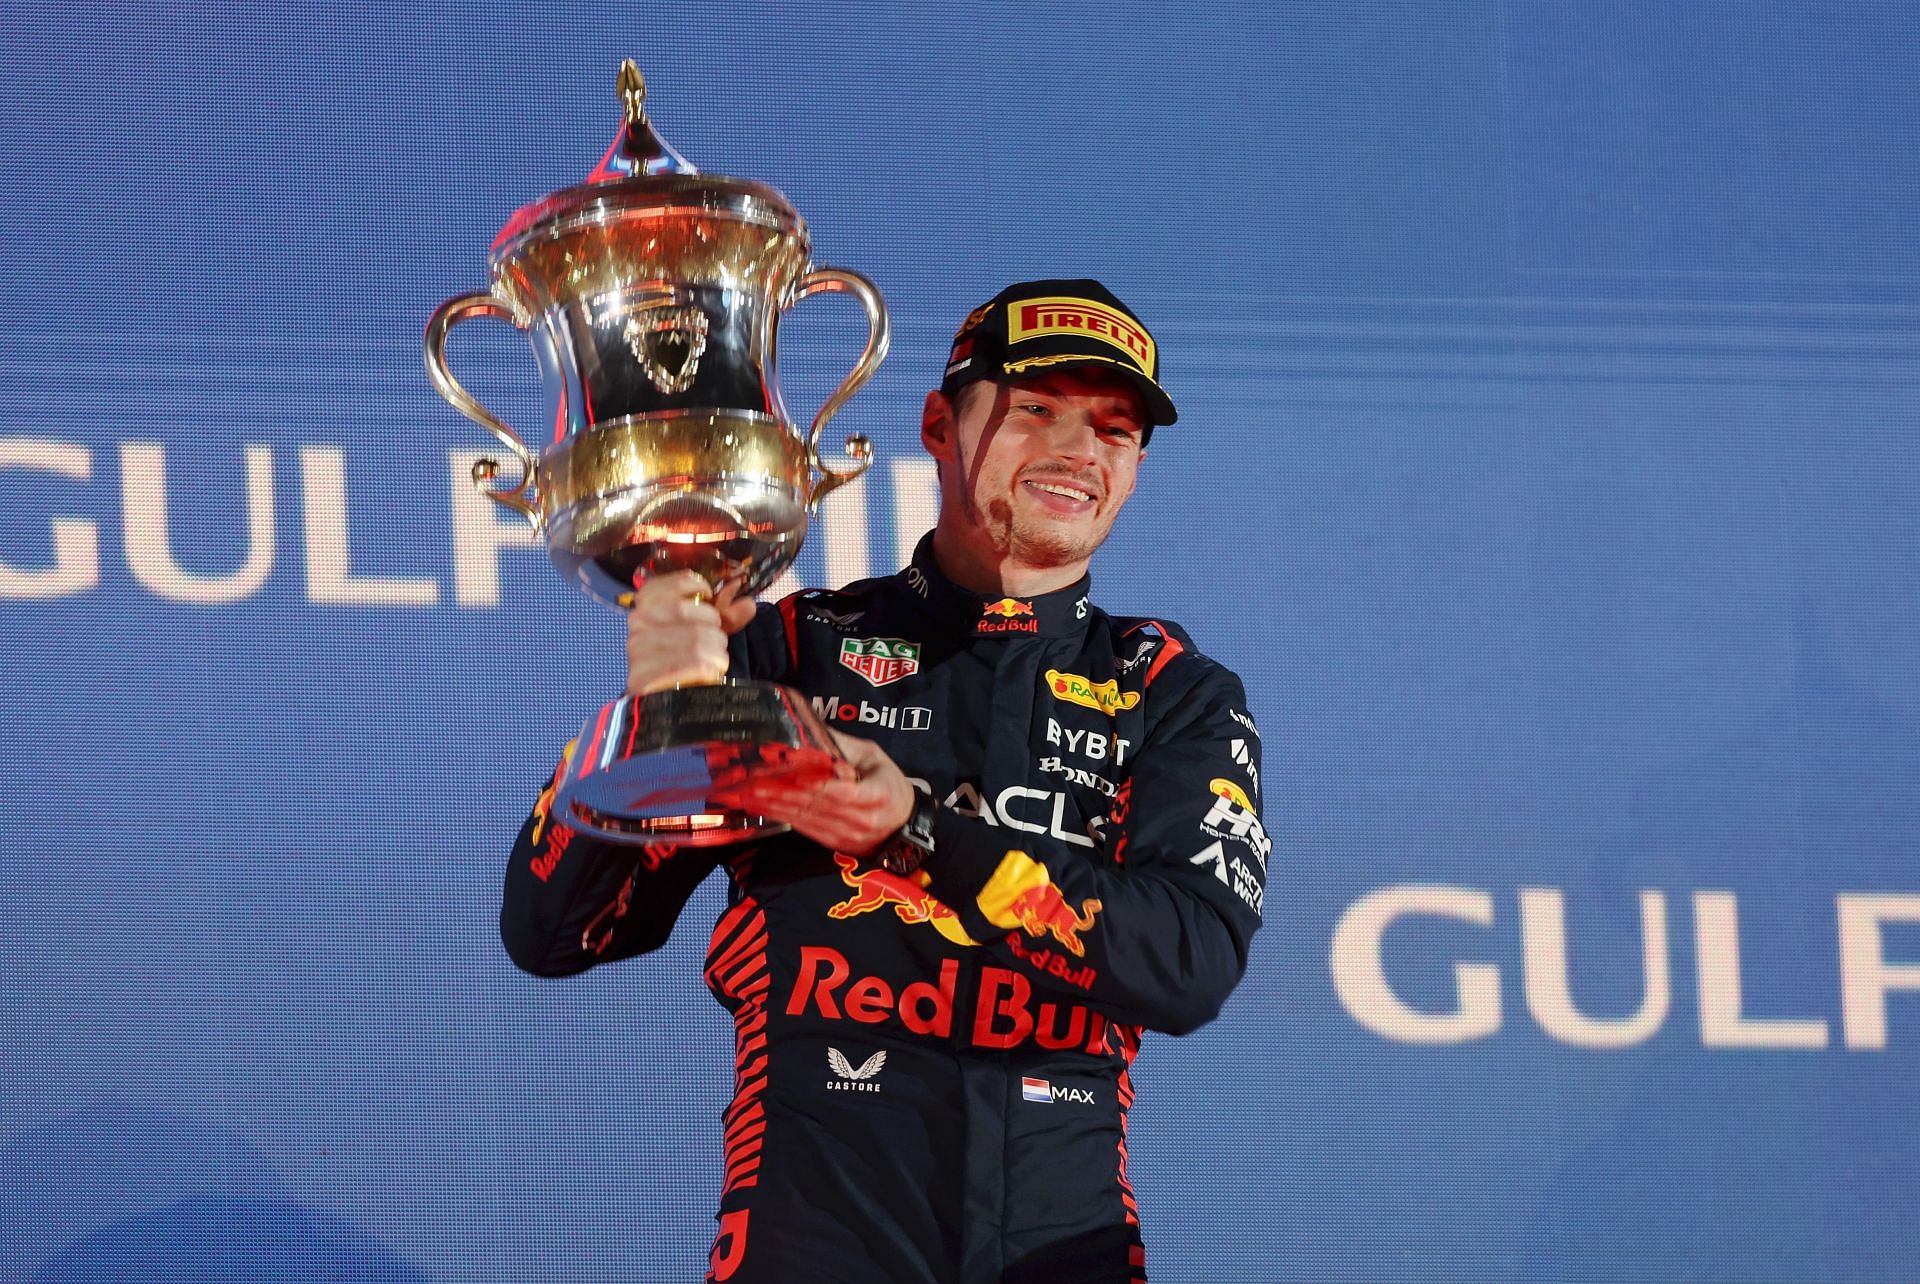 Max Verstappen's race engineer shares frustration during 2023 F1 Bahrain GP despite dominant win